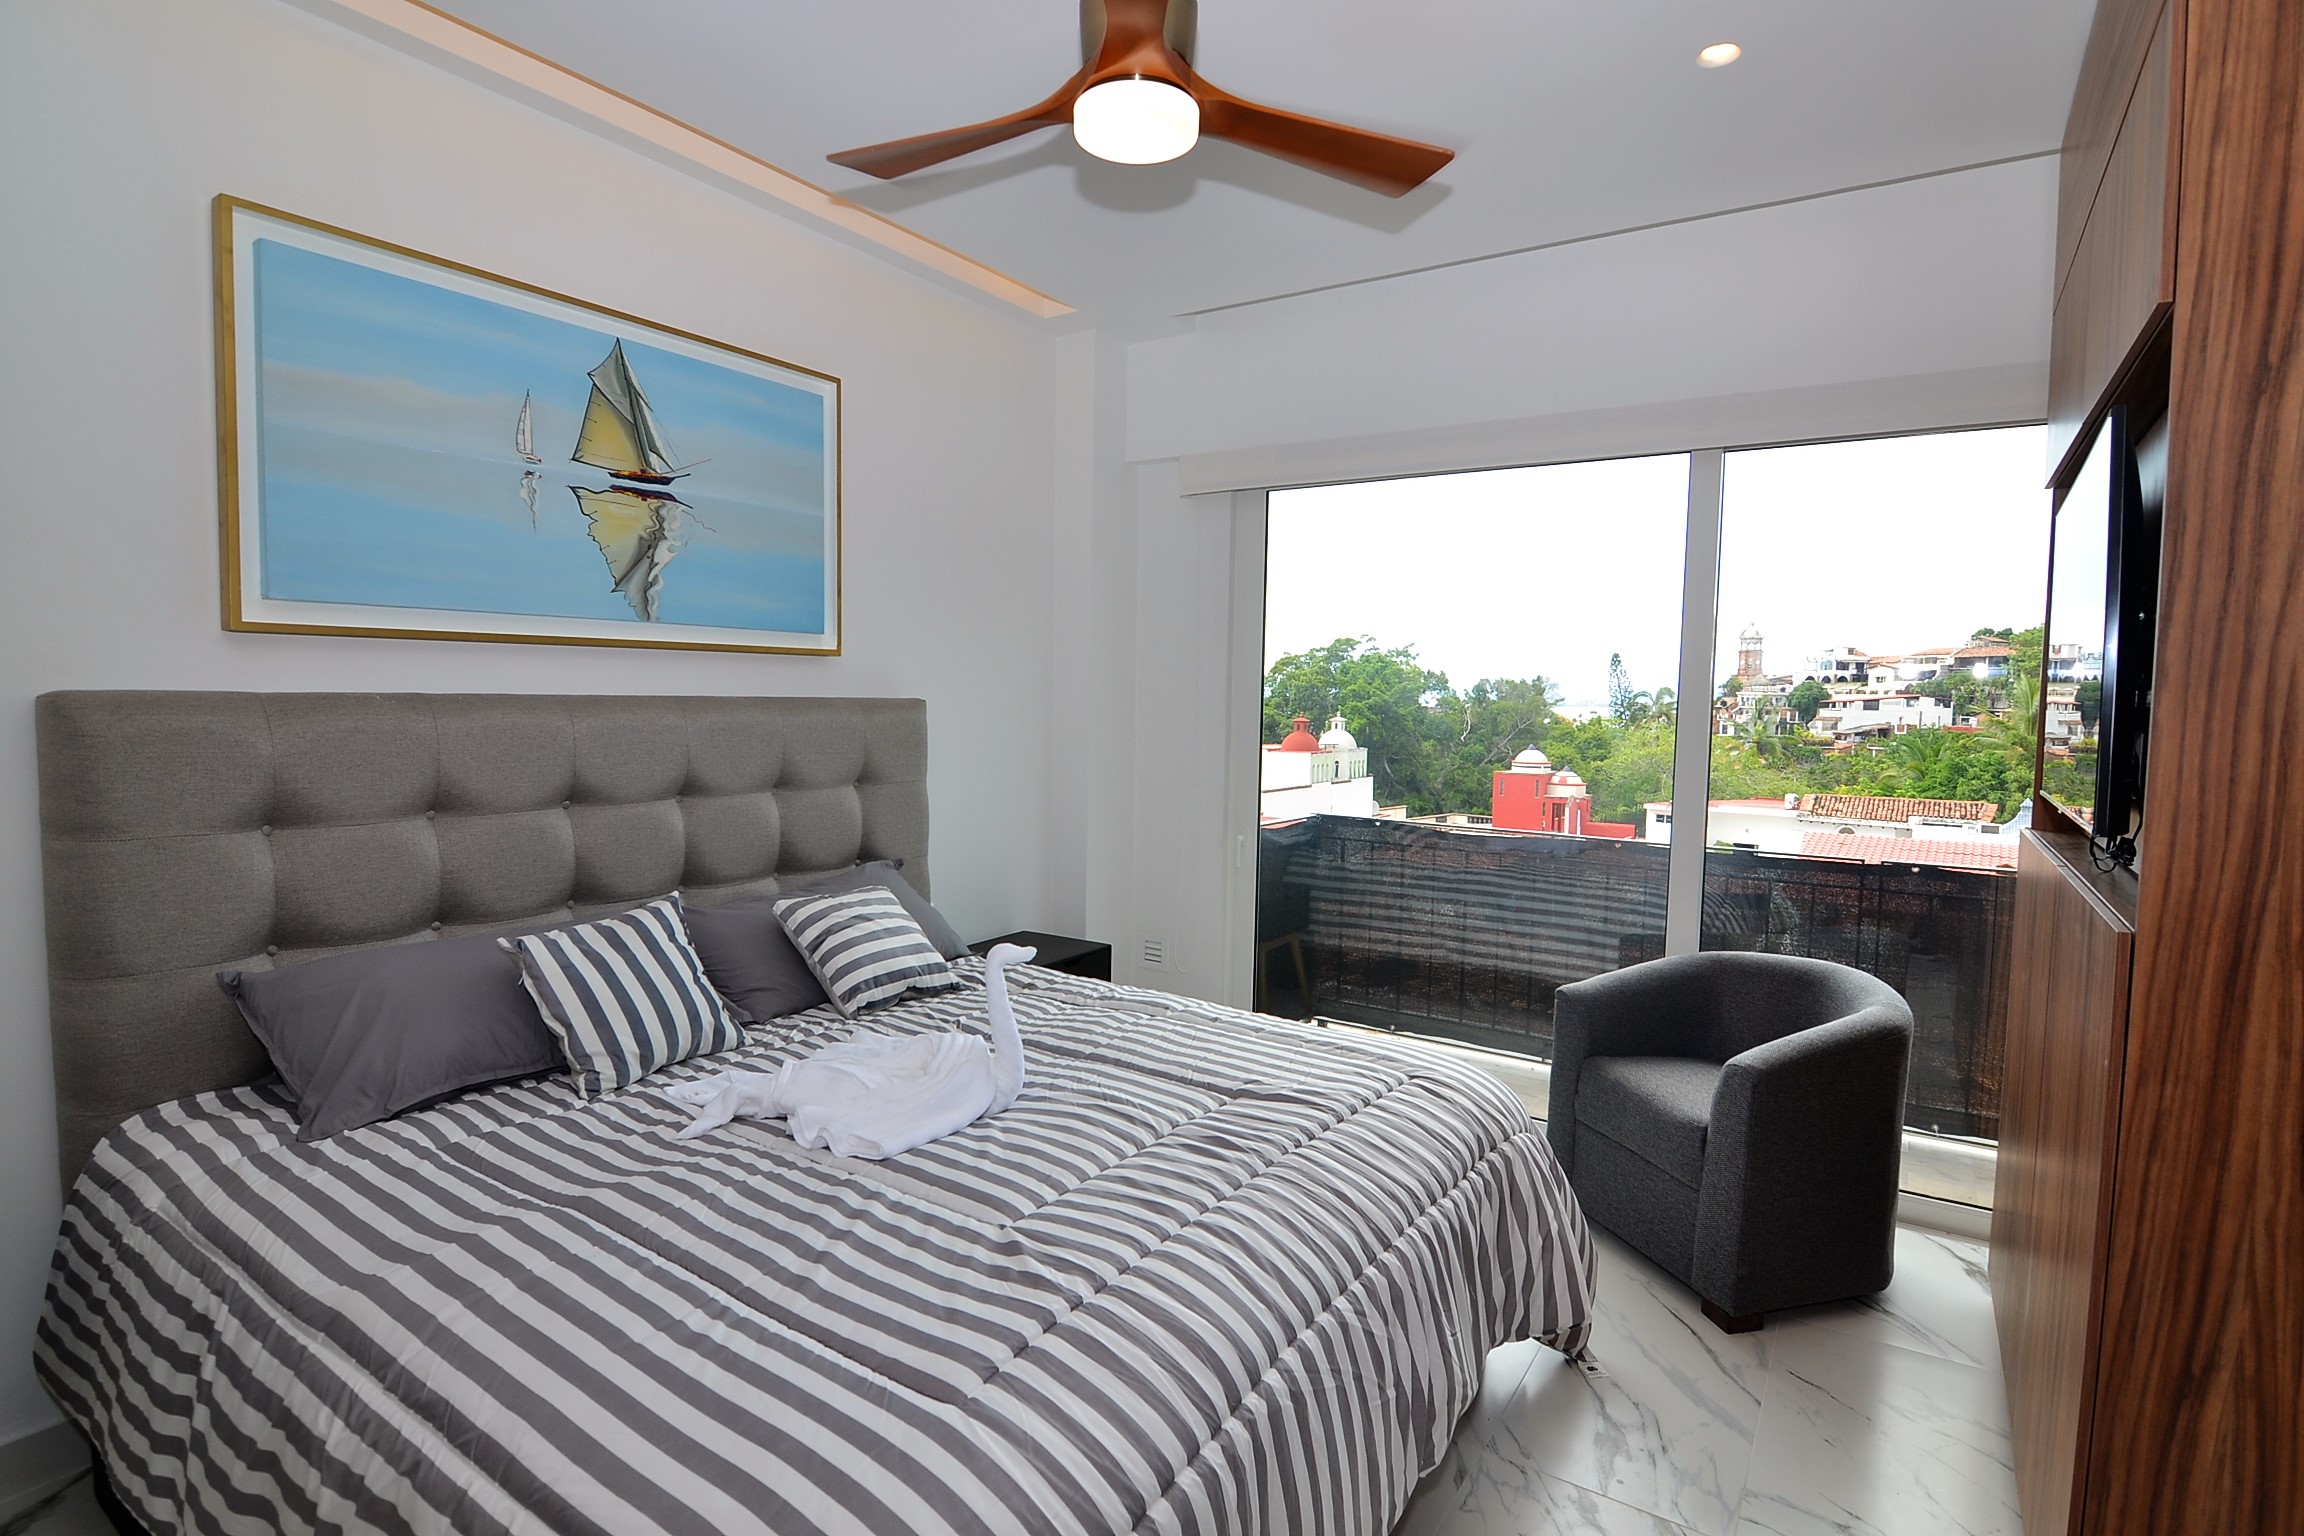 Condo Avida 411 - Puerto Vallarta Romatic Zone Condo For Rent Furnished (23)